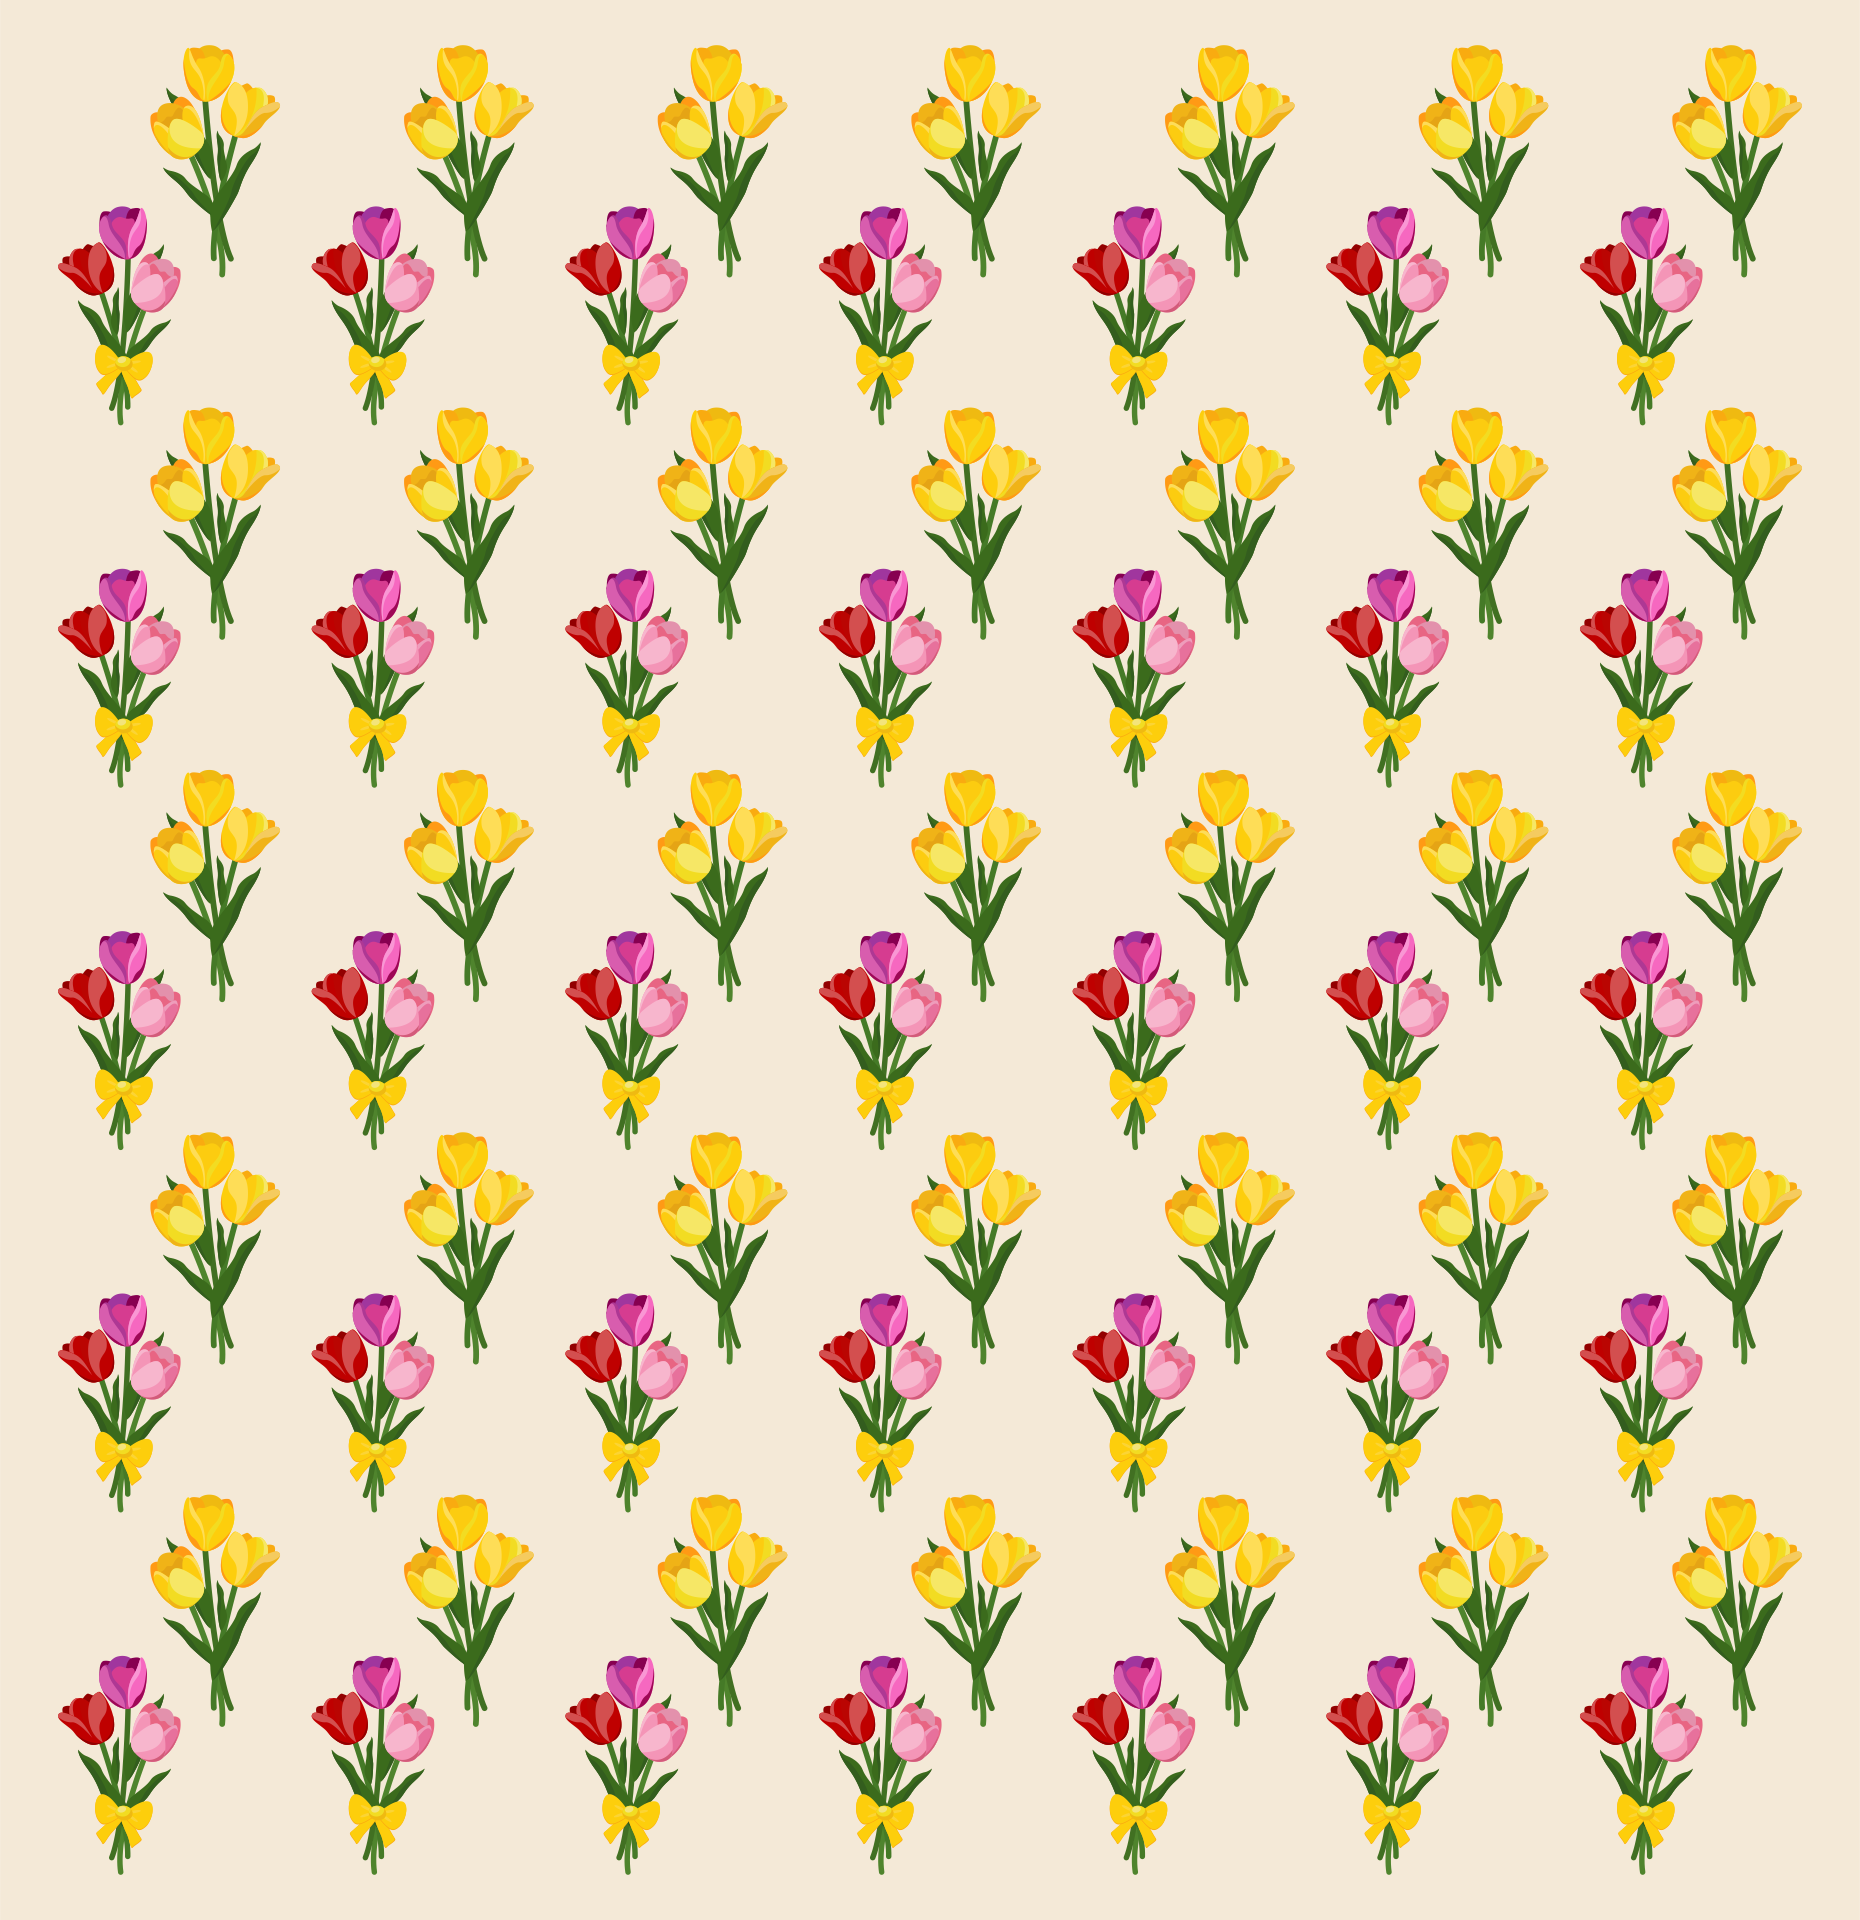 Printable Tulip Patterns